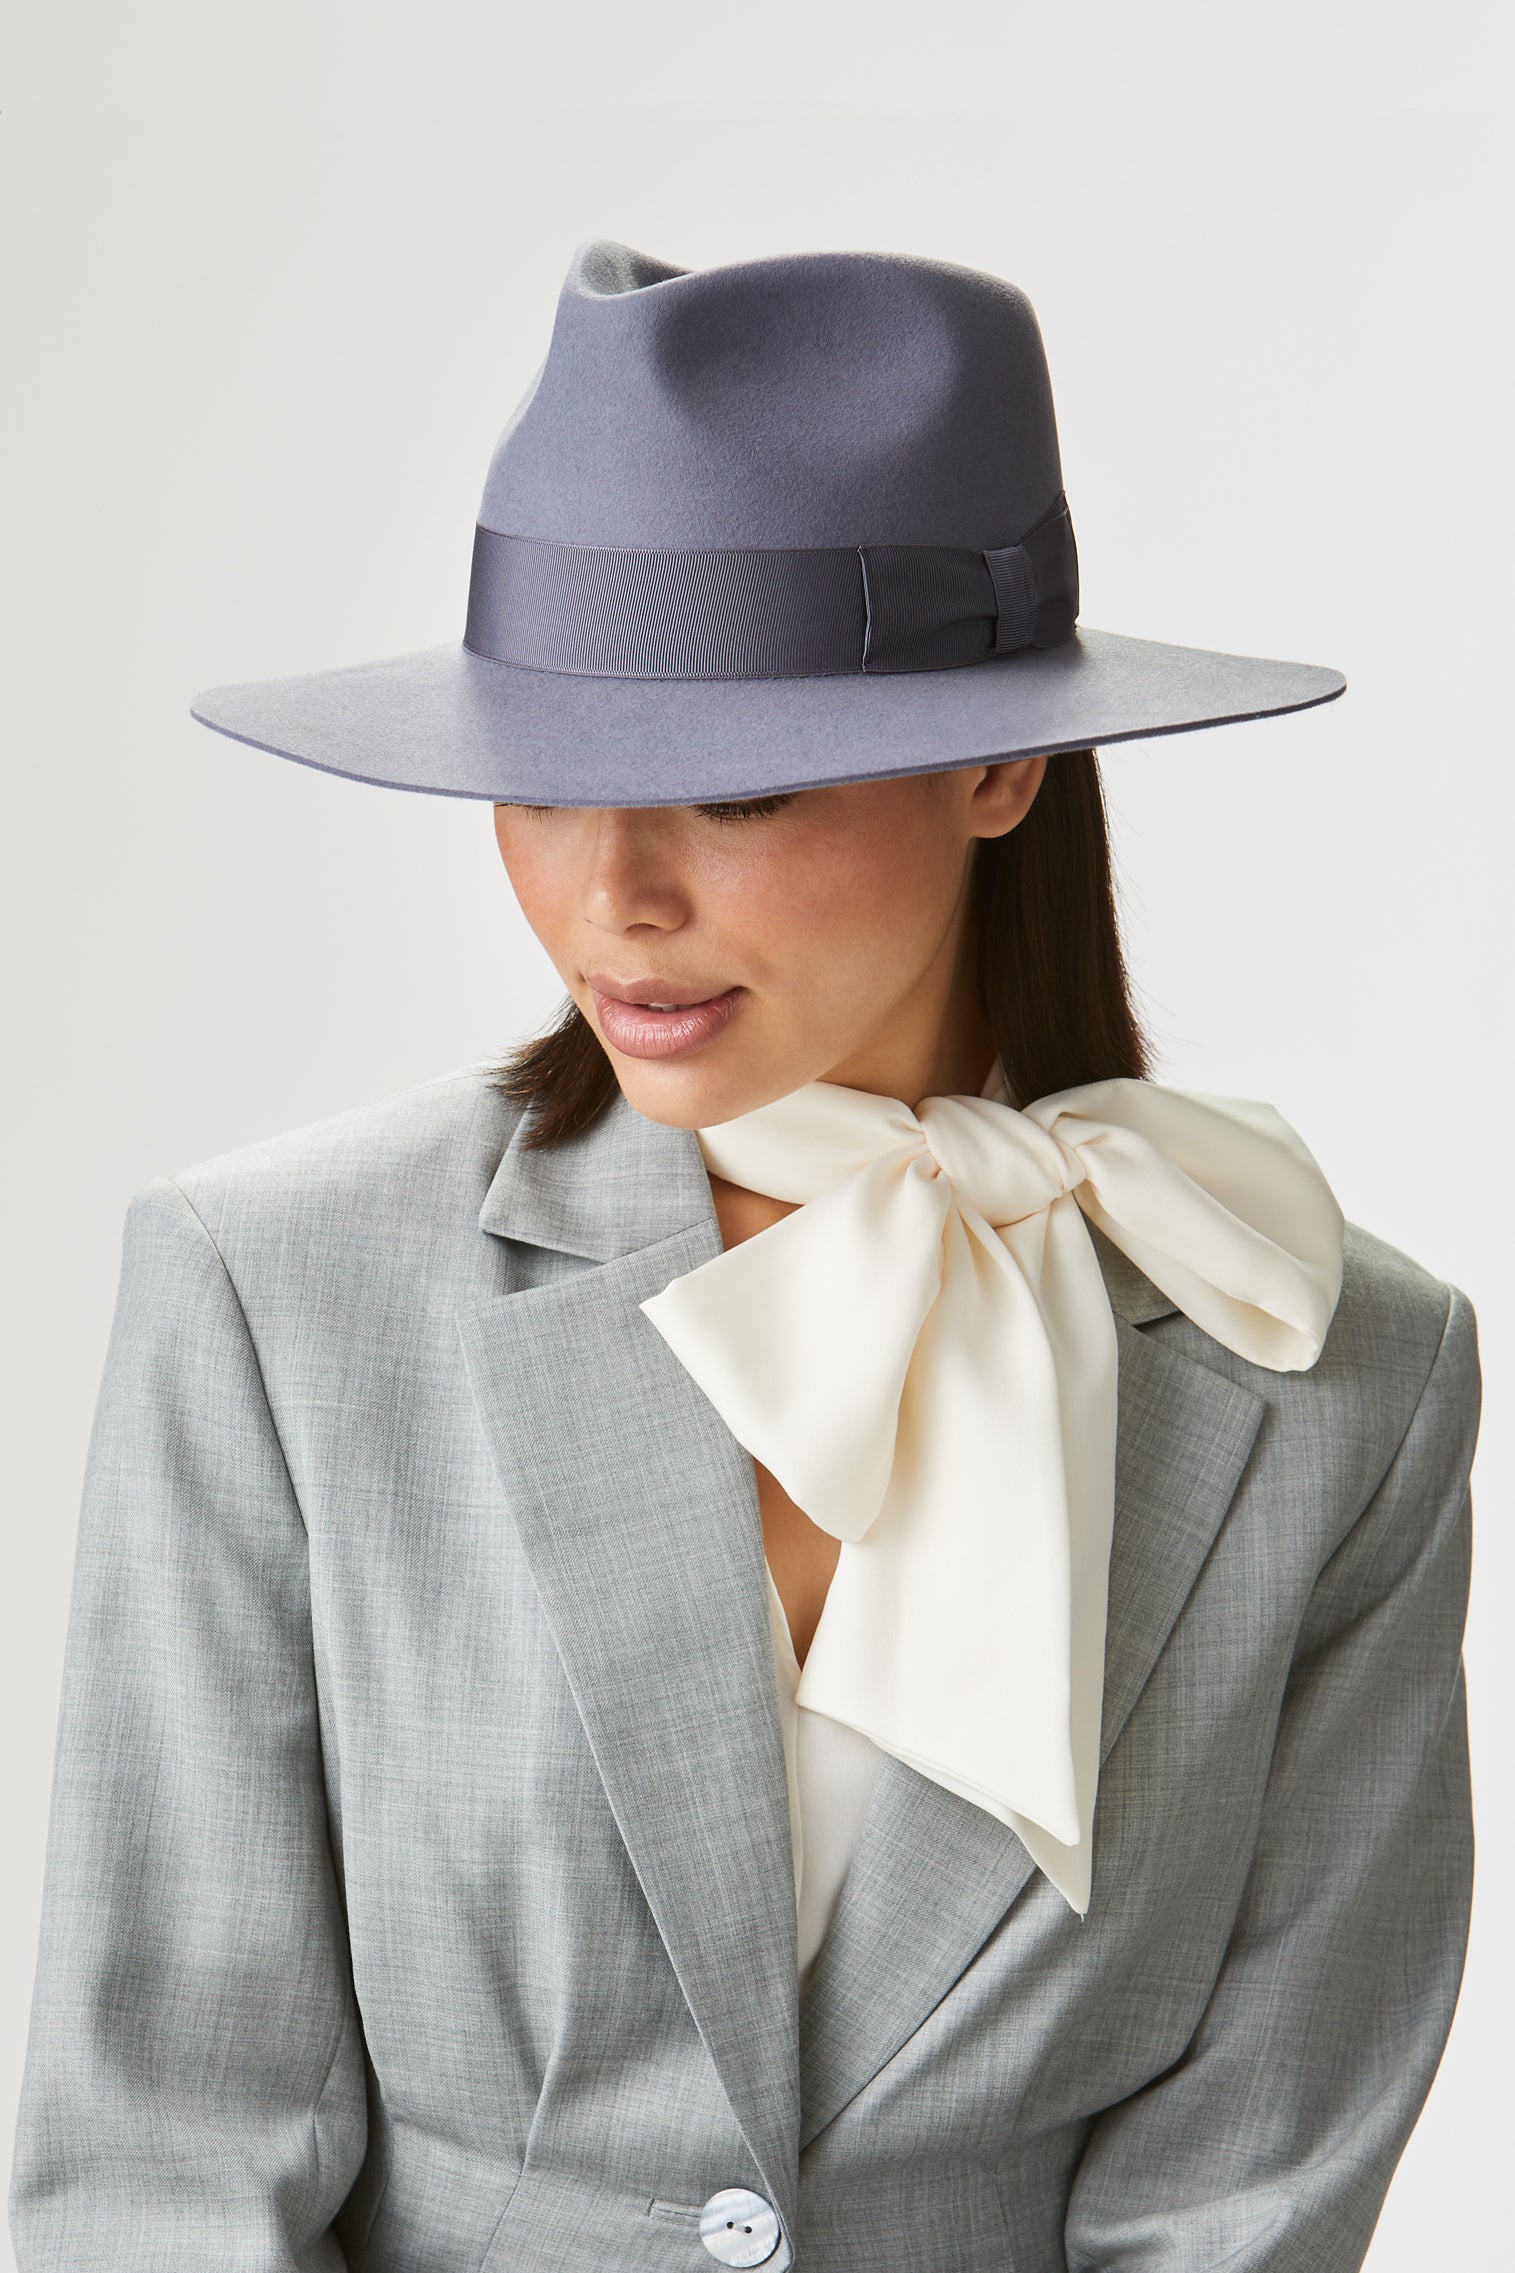 Toni Blue Flat-Brim Fedora - Women’s Hats - Lock & Co. Hatters London UK